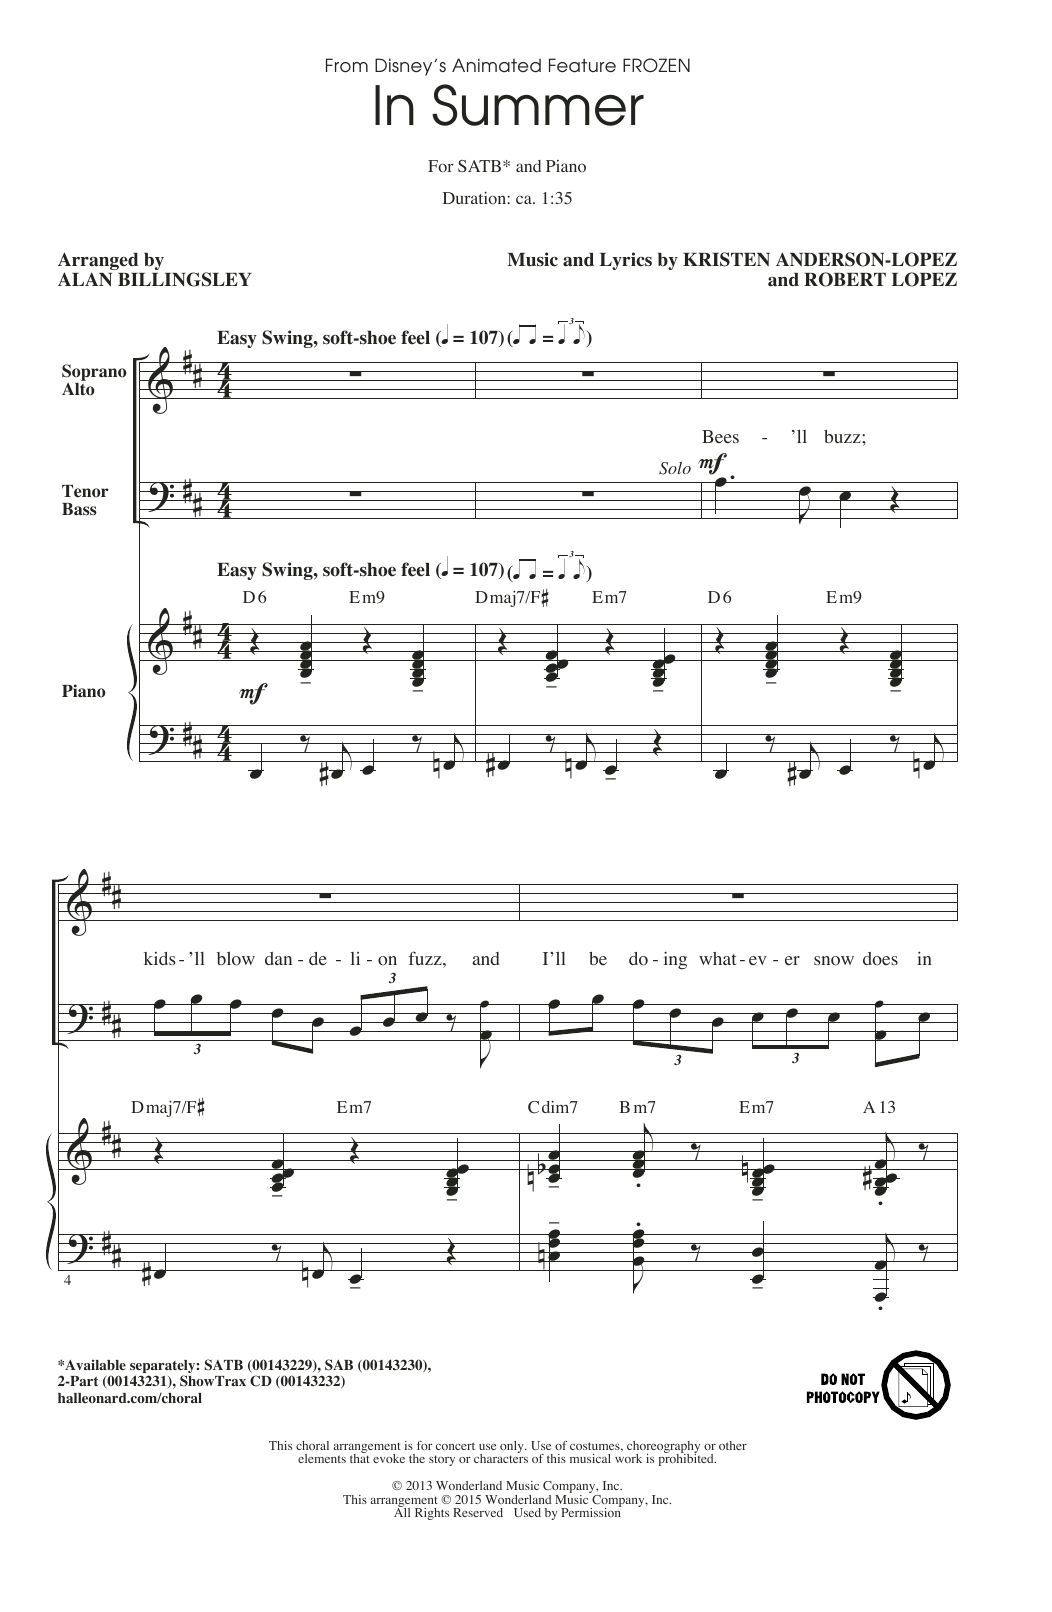 Josh Gad In Summer (from Disney's Frozen) (arr. Alan Billingsley) Sheet Music Notes & Chords for SAB - Download or Print PDF